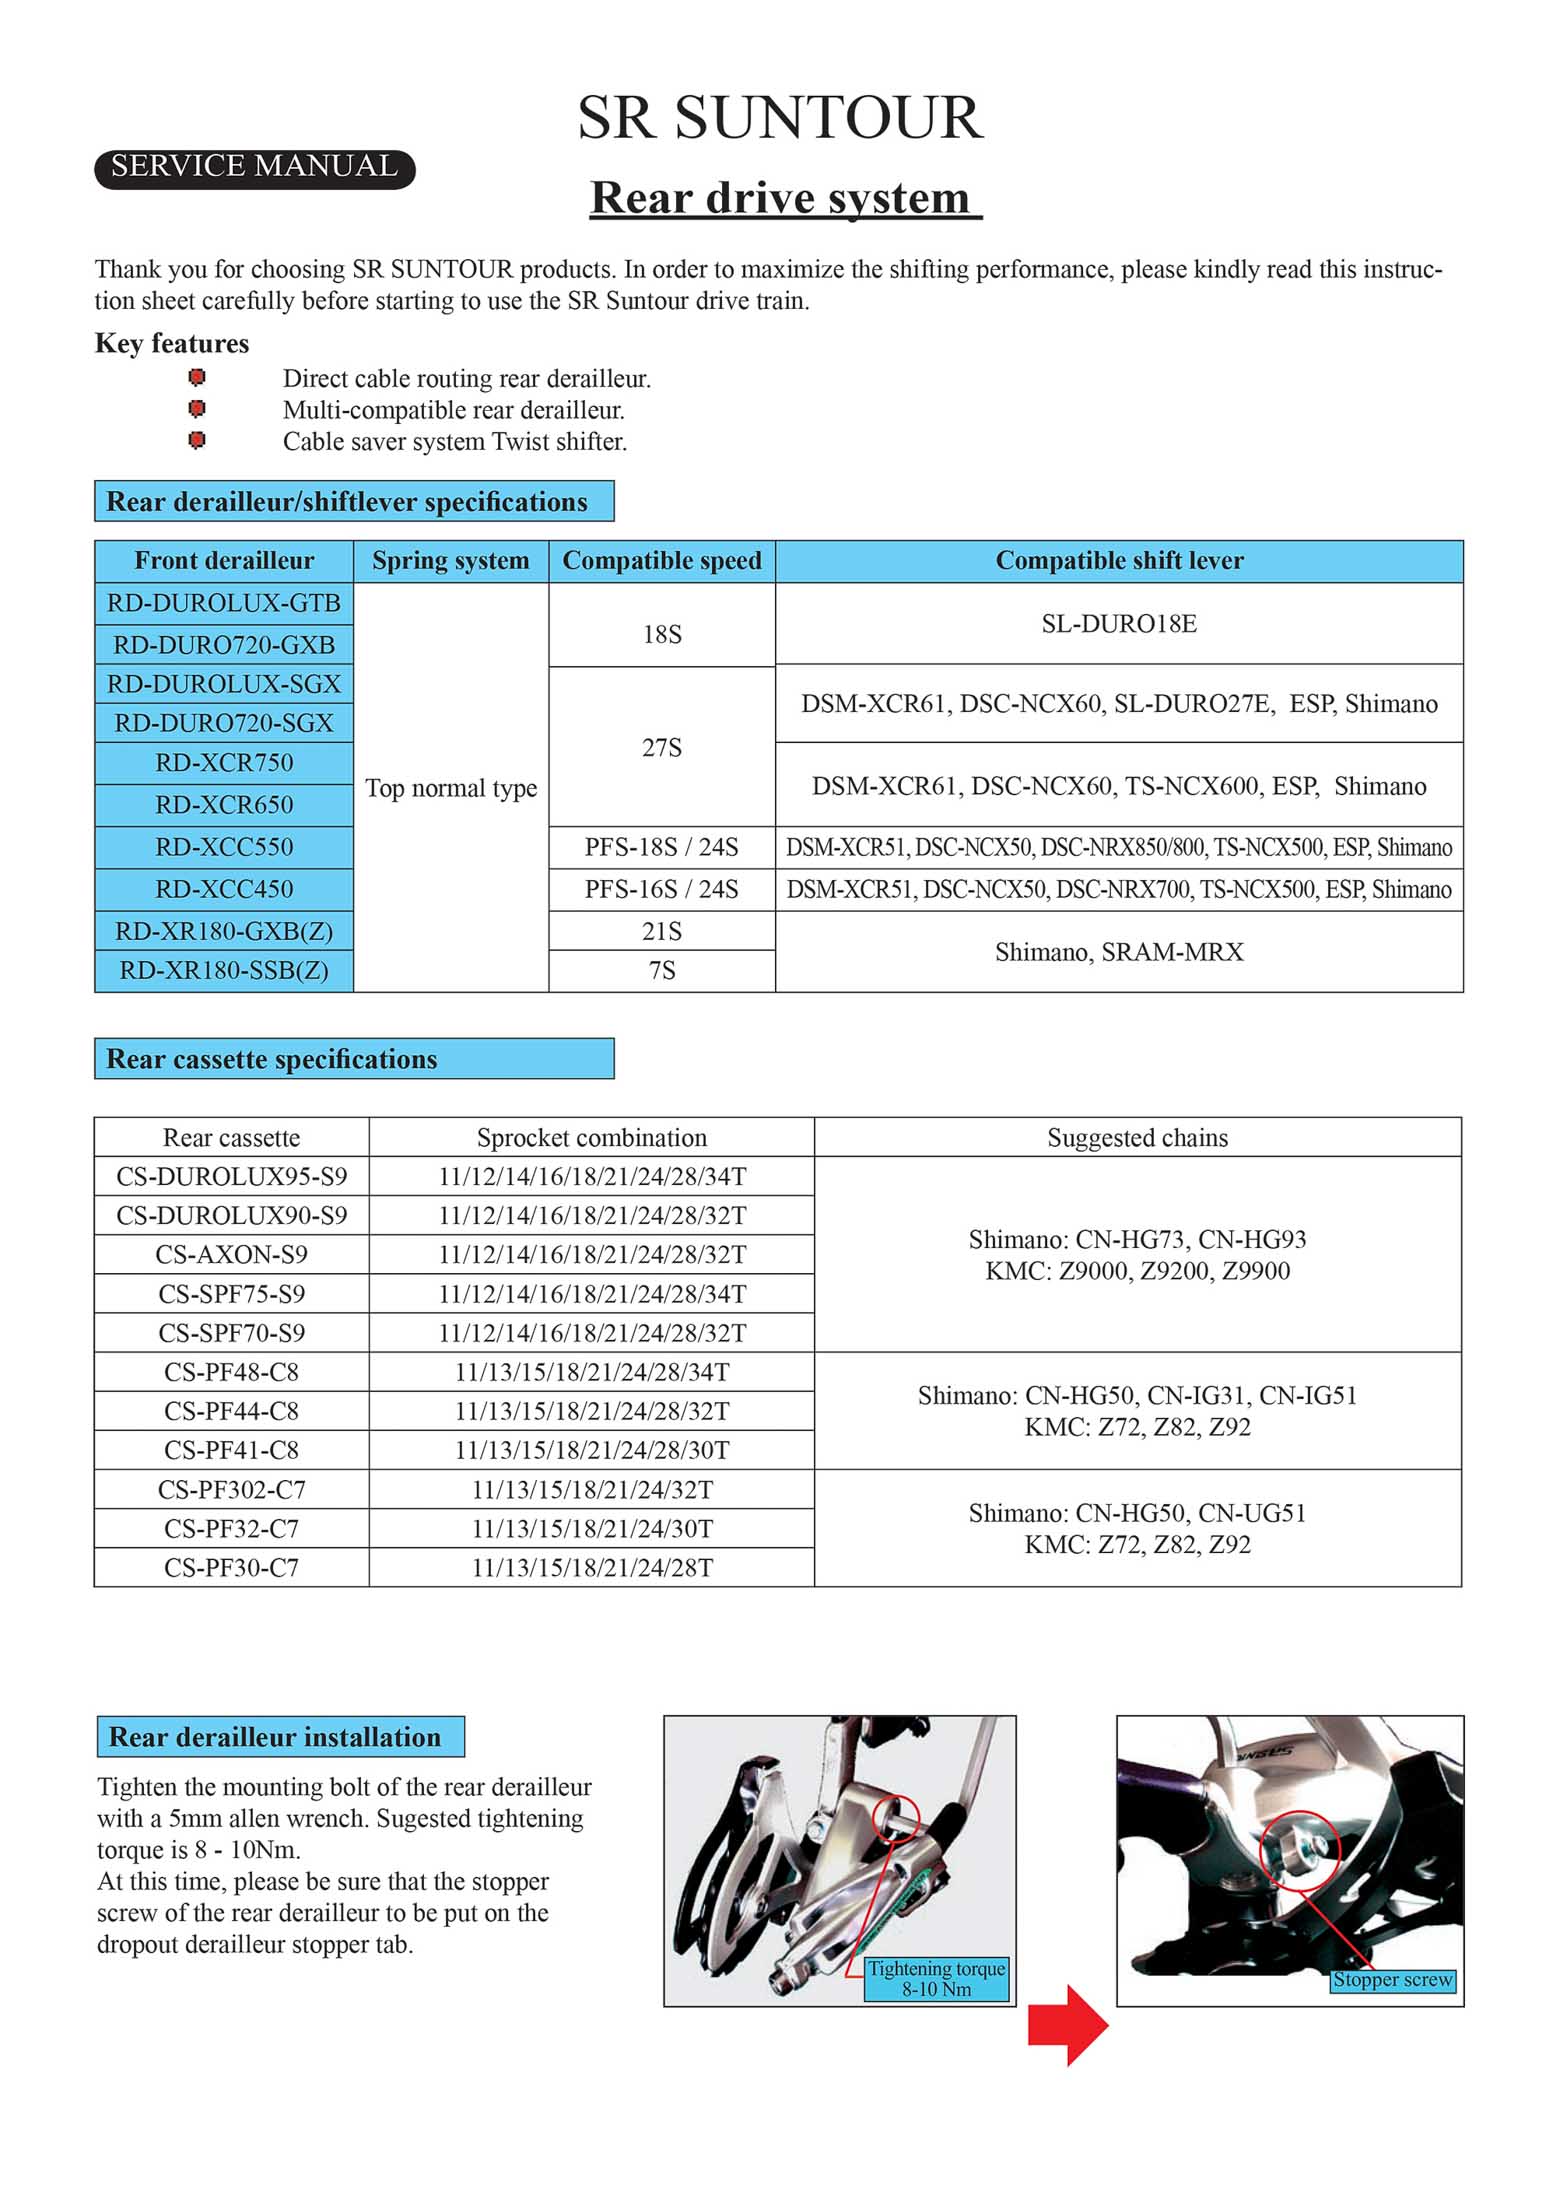 SR SUNTOUR Service Manual - Rear Drive System scan 001 main image